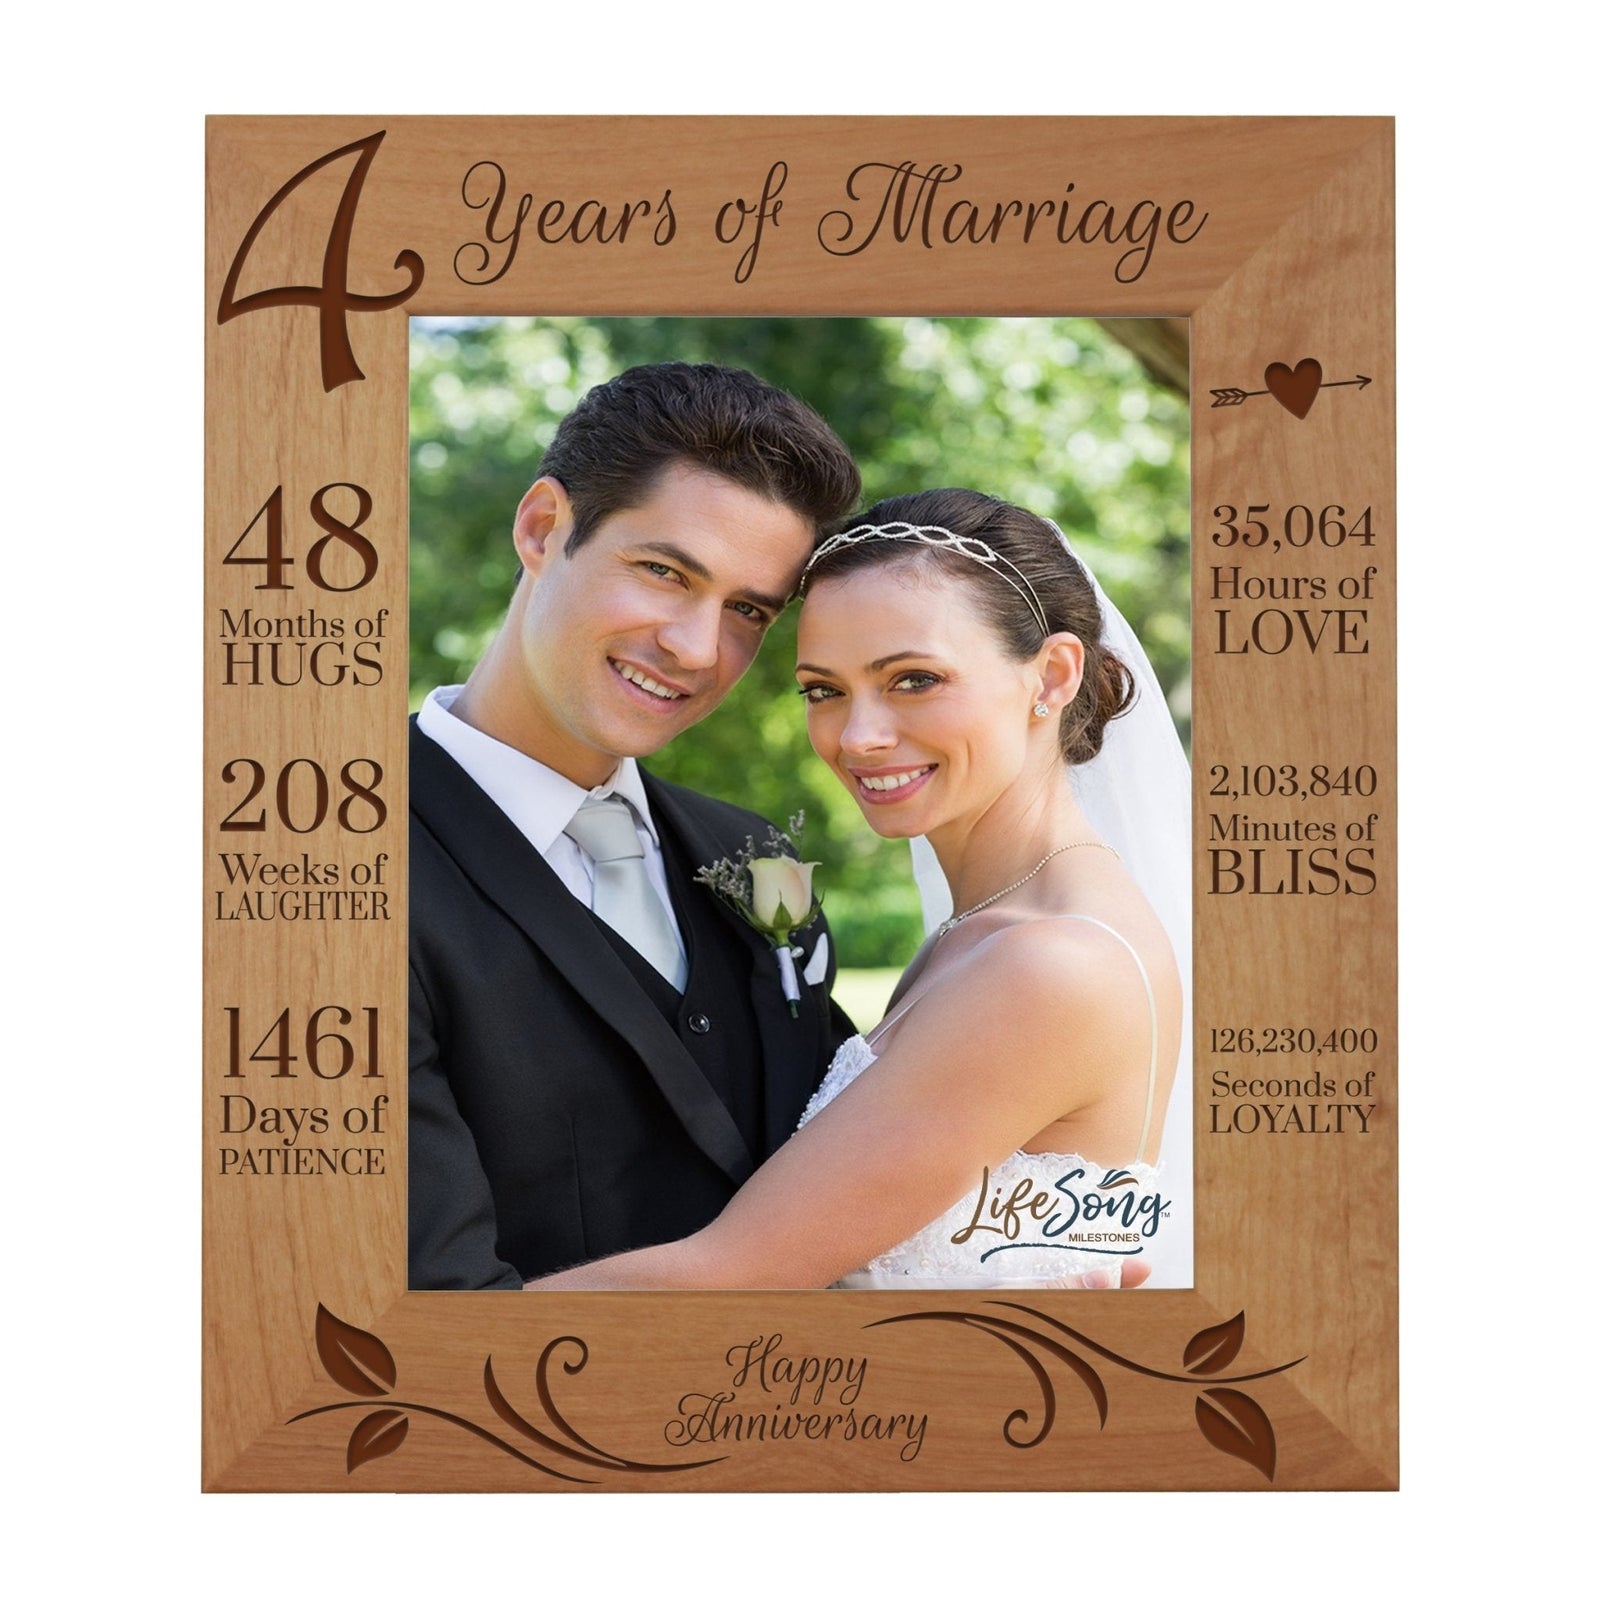 Couples 4th Wedding Anniversary Photo Frame Home Decor Gift Ideas - Happy Anniversary - LifeSong Milestones